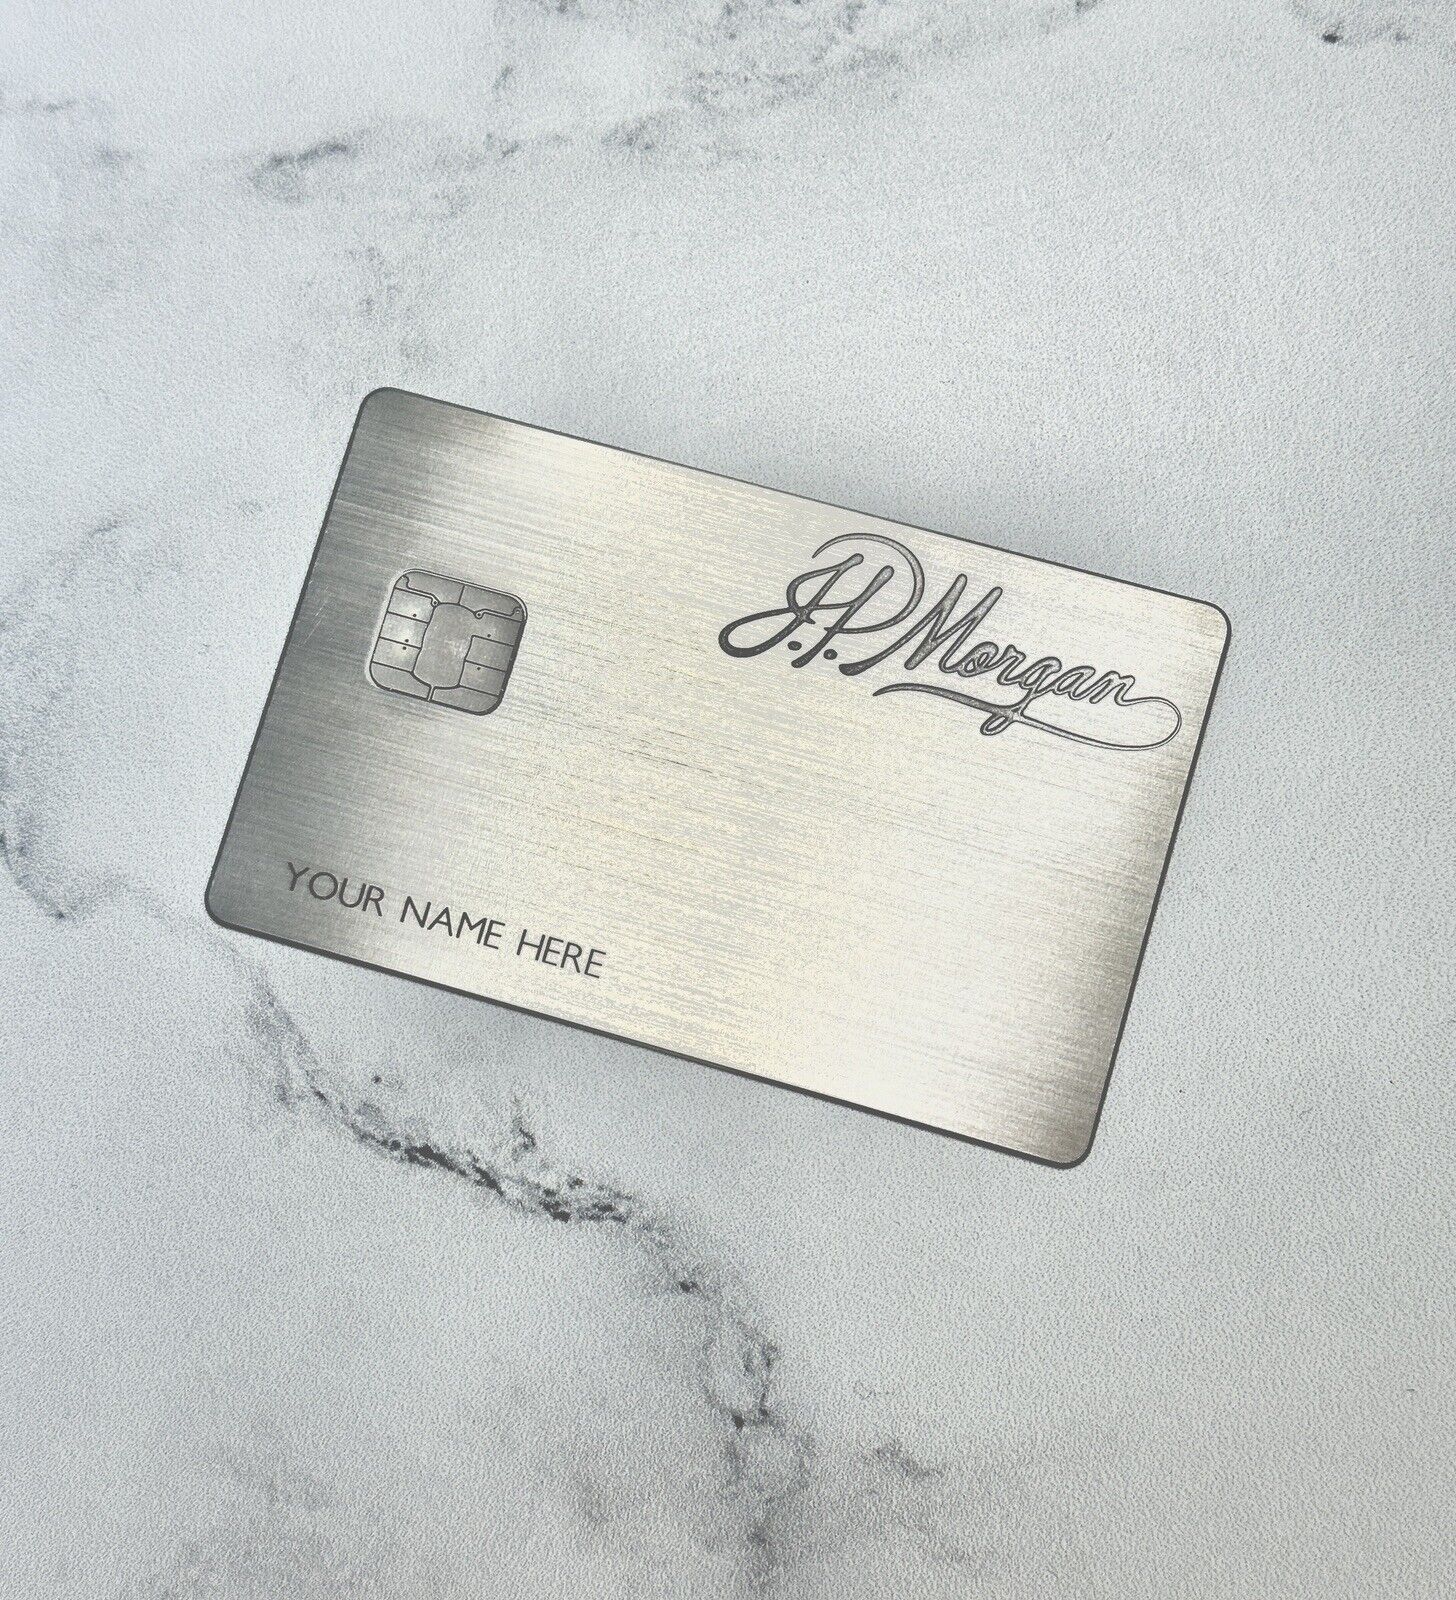 JP Morgan Reserve CUSTOM Chip Stripe Palladium Silver Metal Novelty Credit Card